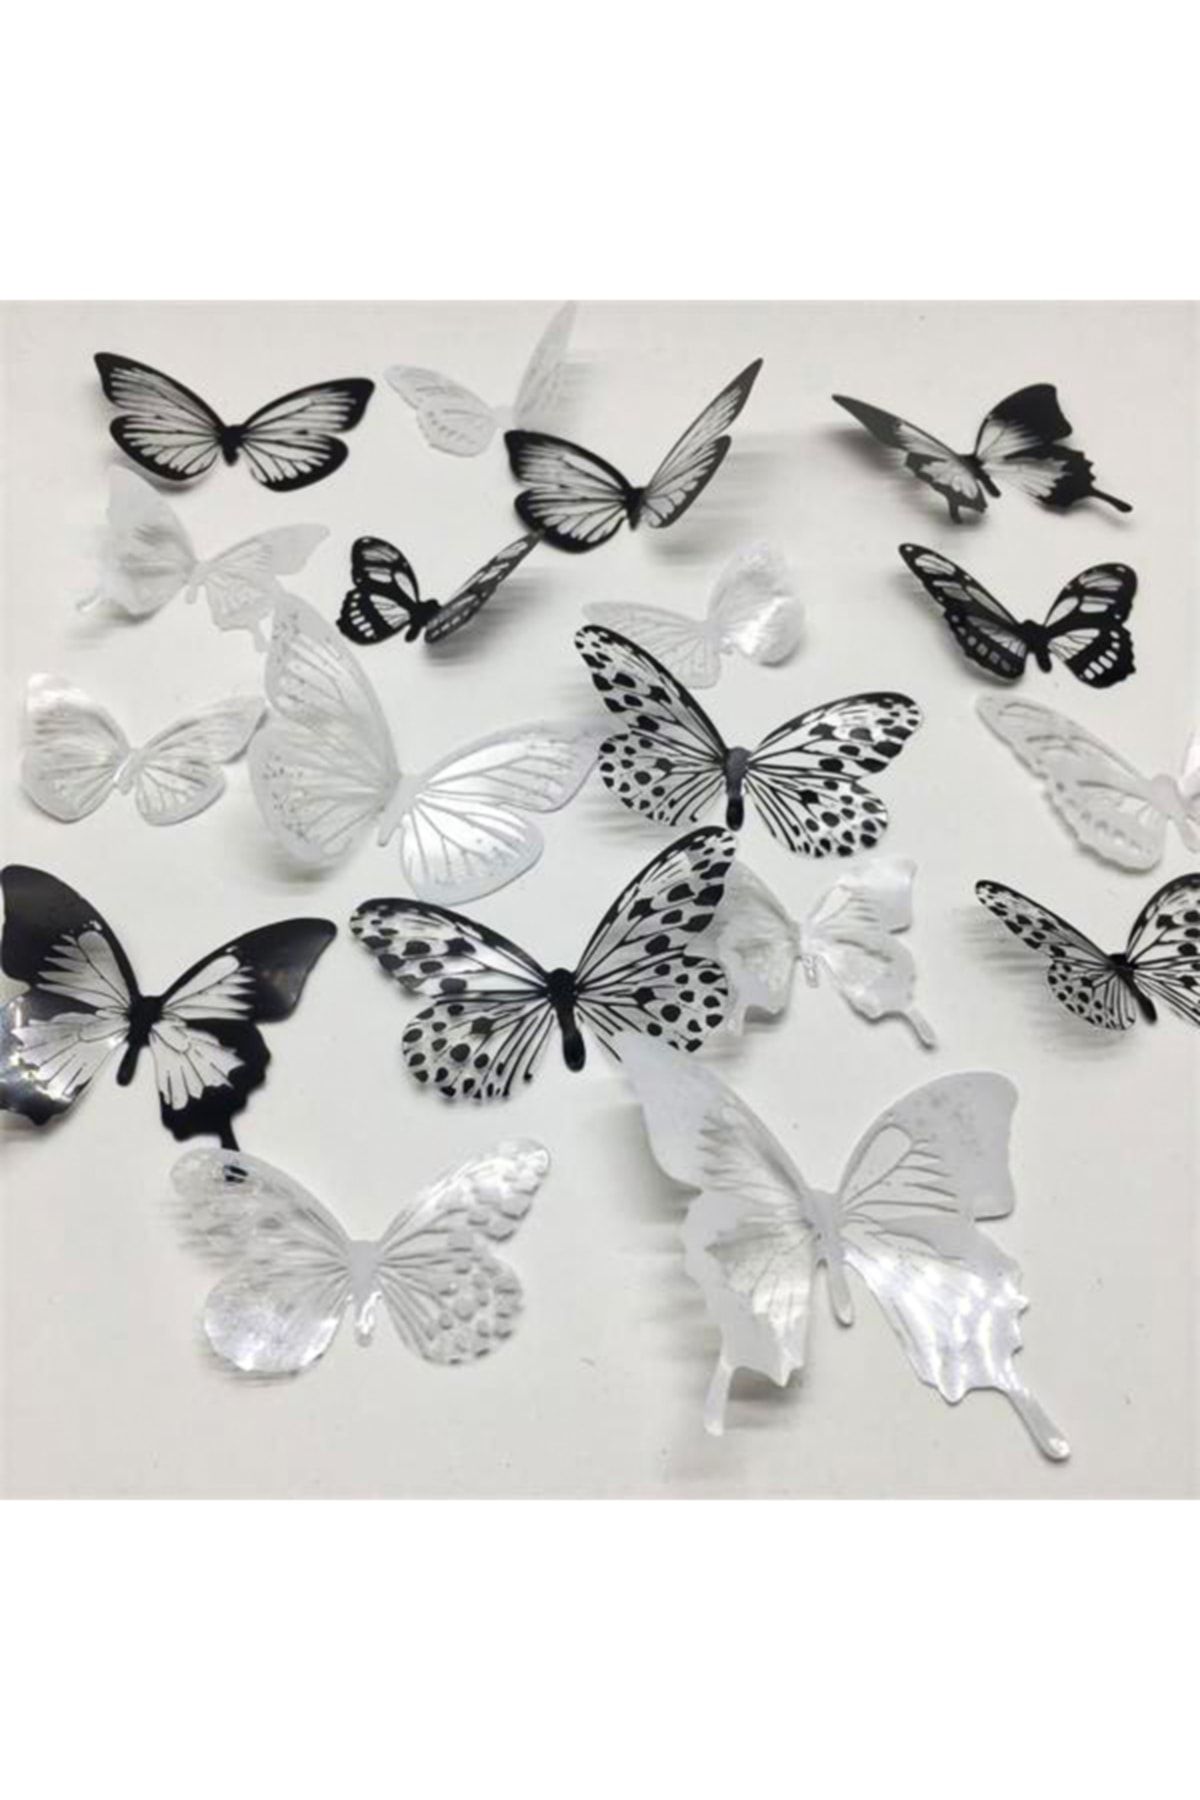 ELSE NIPPON 18 Adet 3d Duvar Sticker Çift Kanatlı Kelebek Pvc Wall Stıcker Butterfly